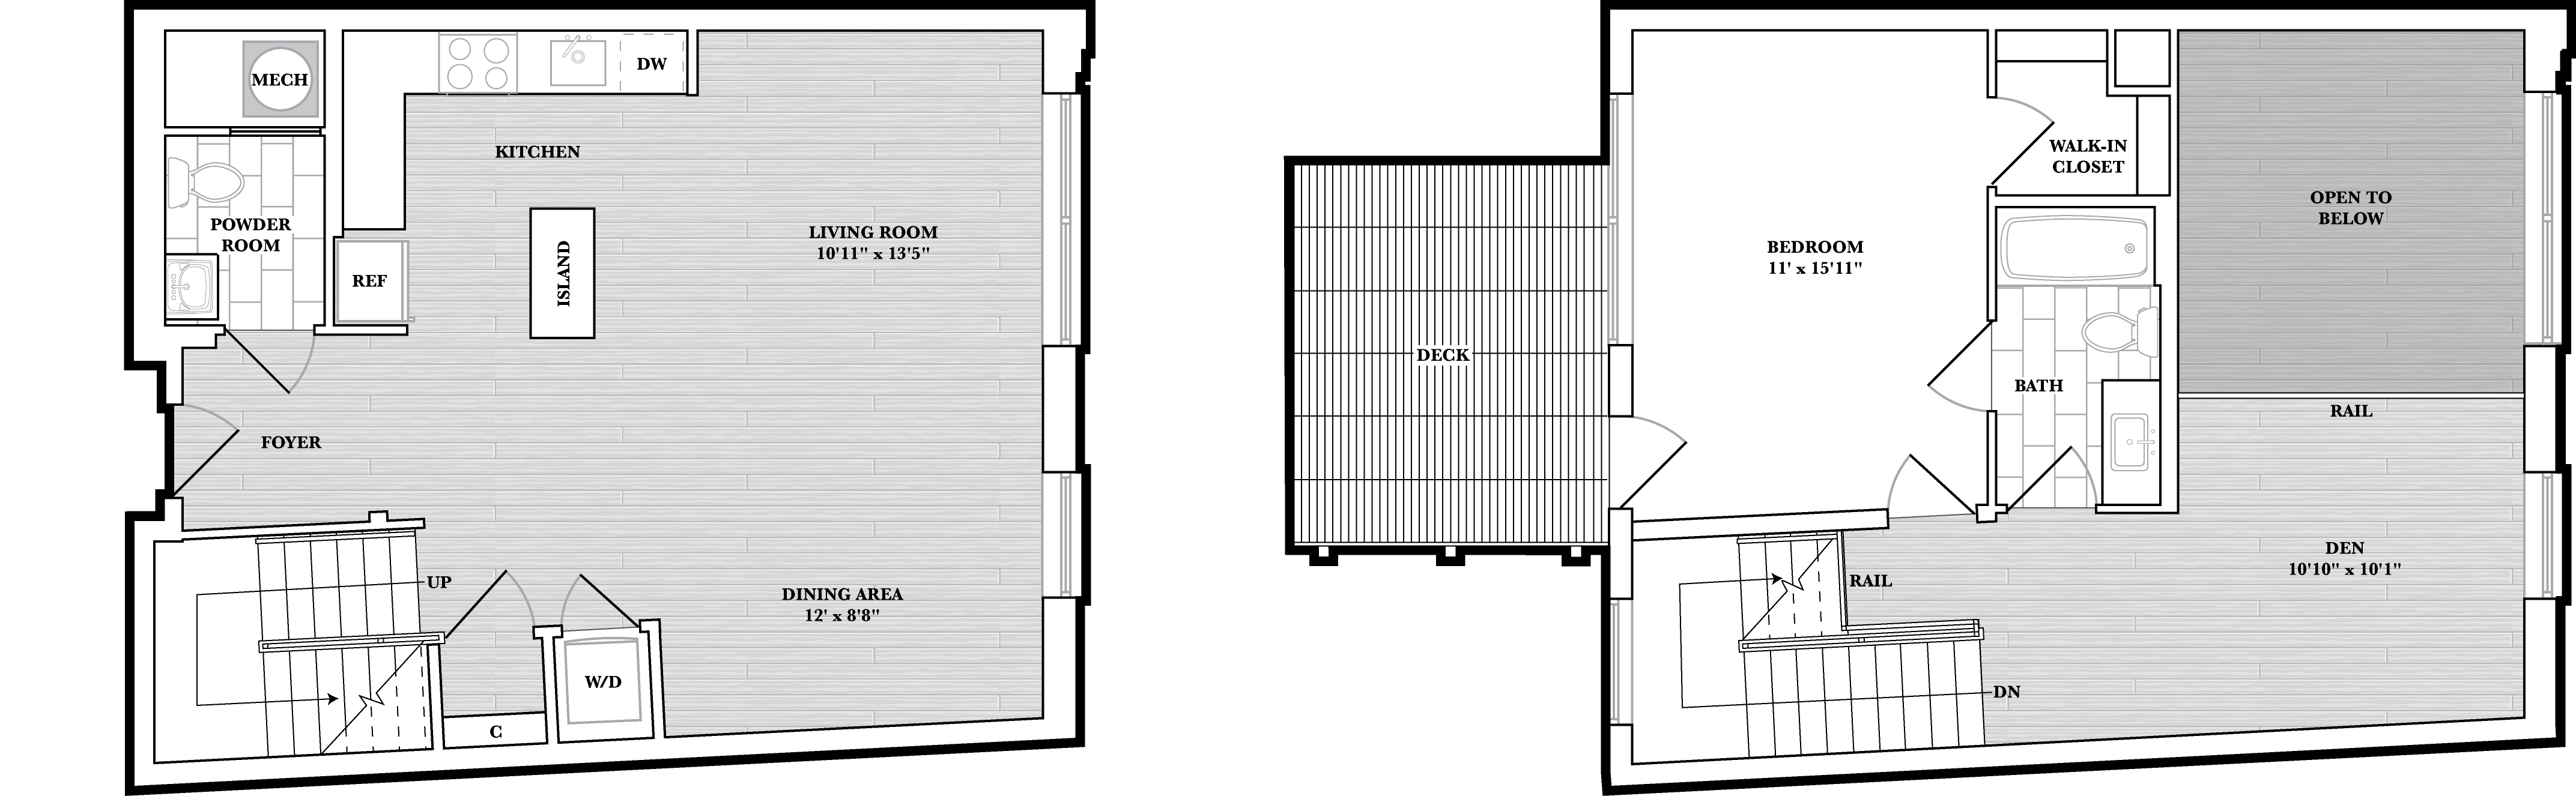 floorplan image of S205